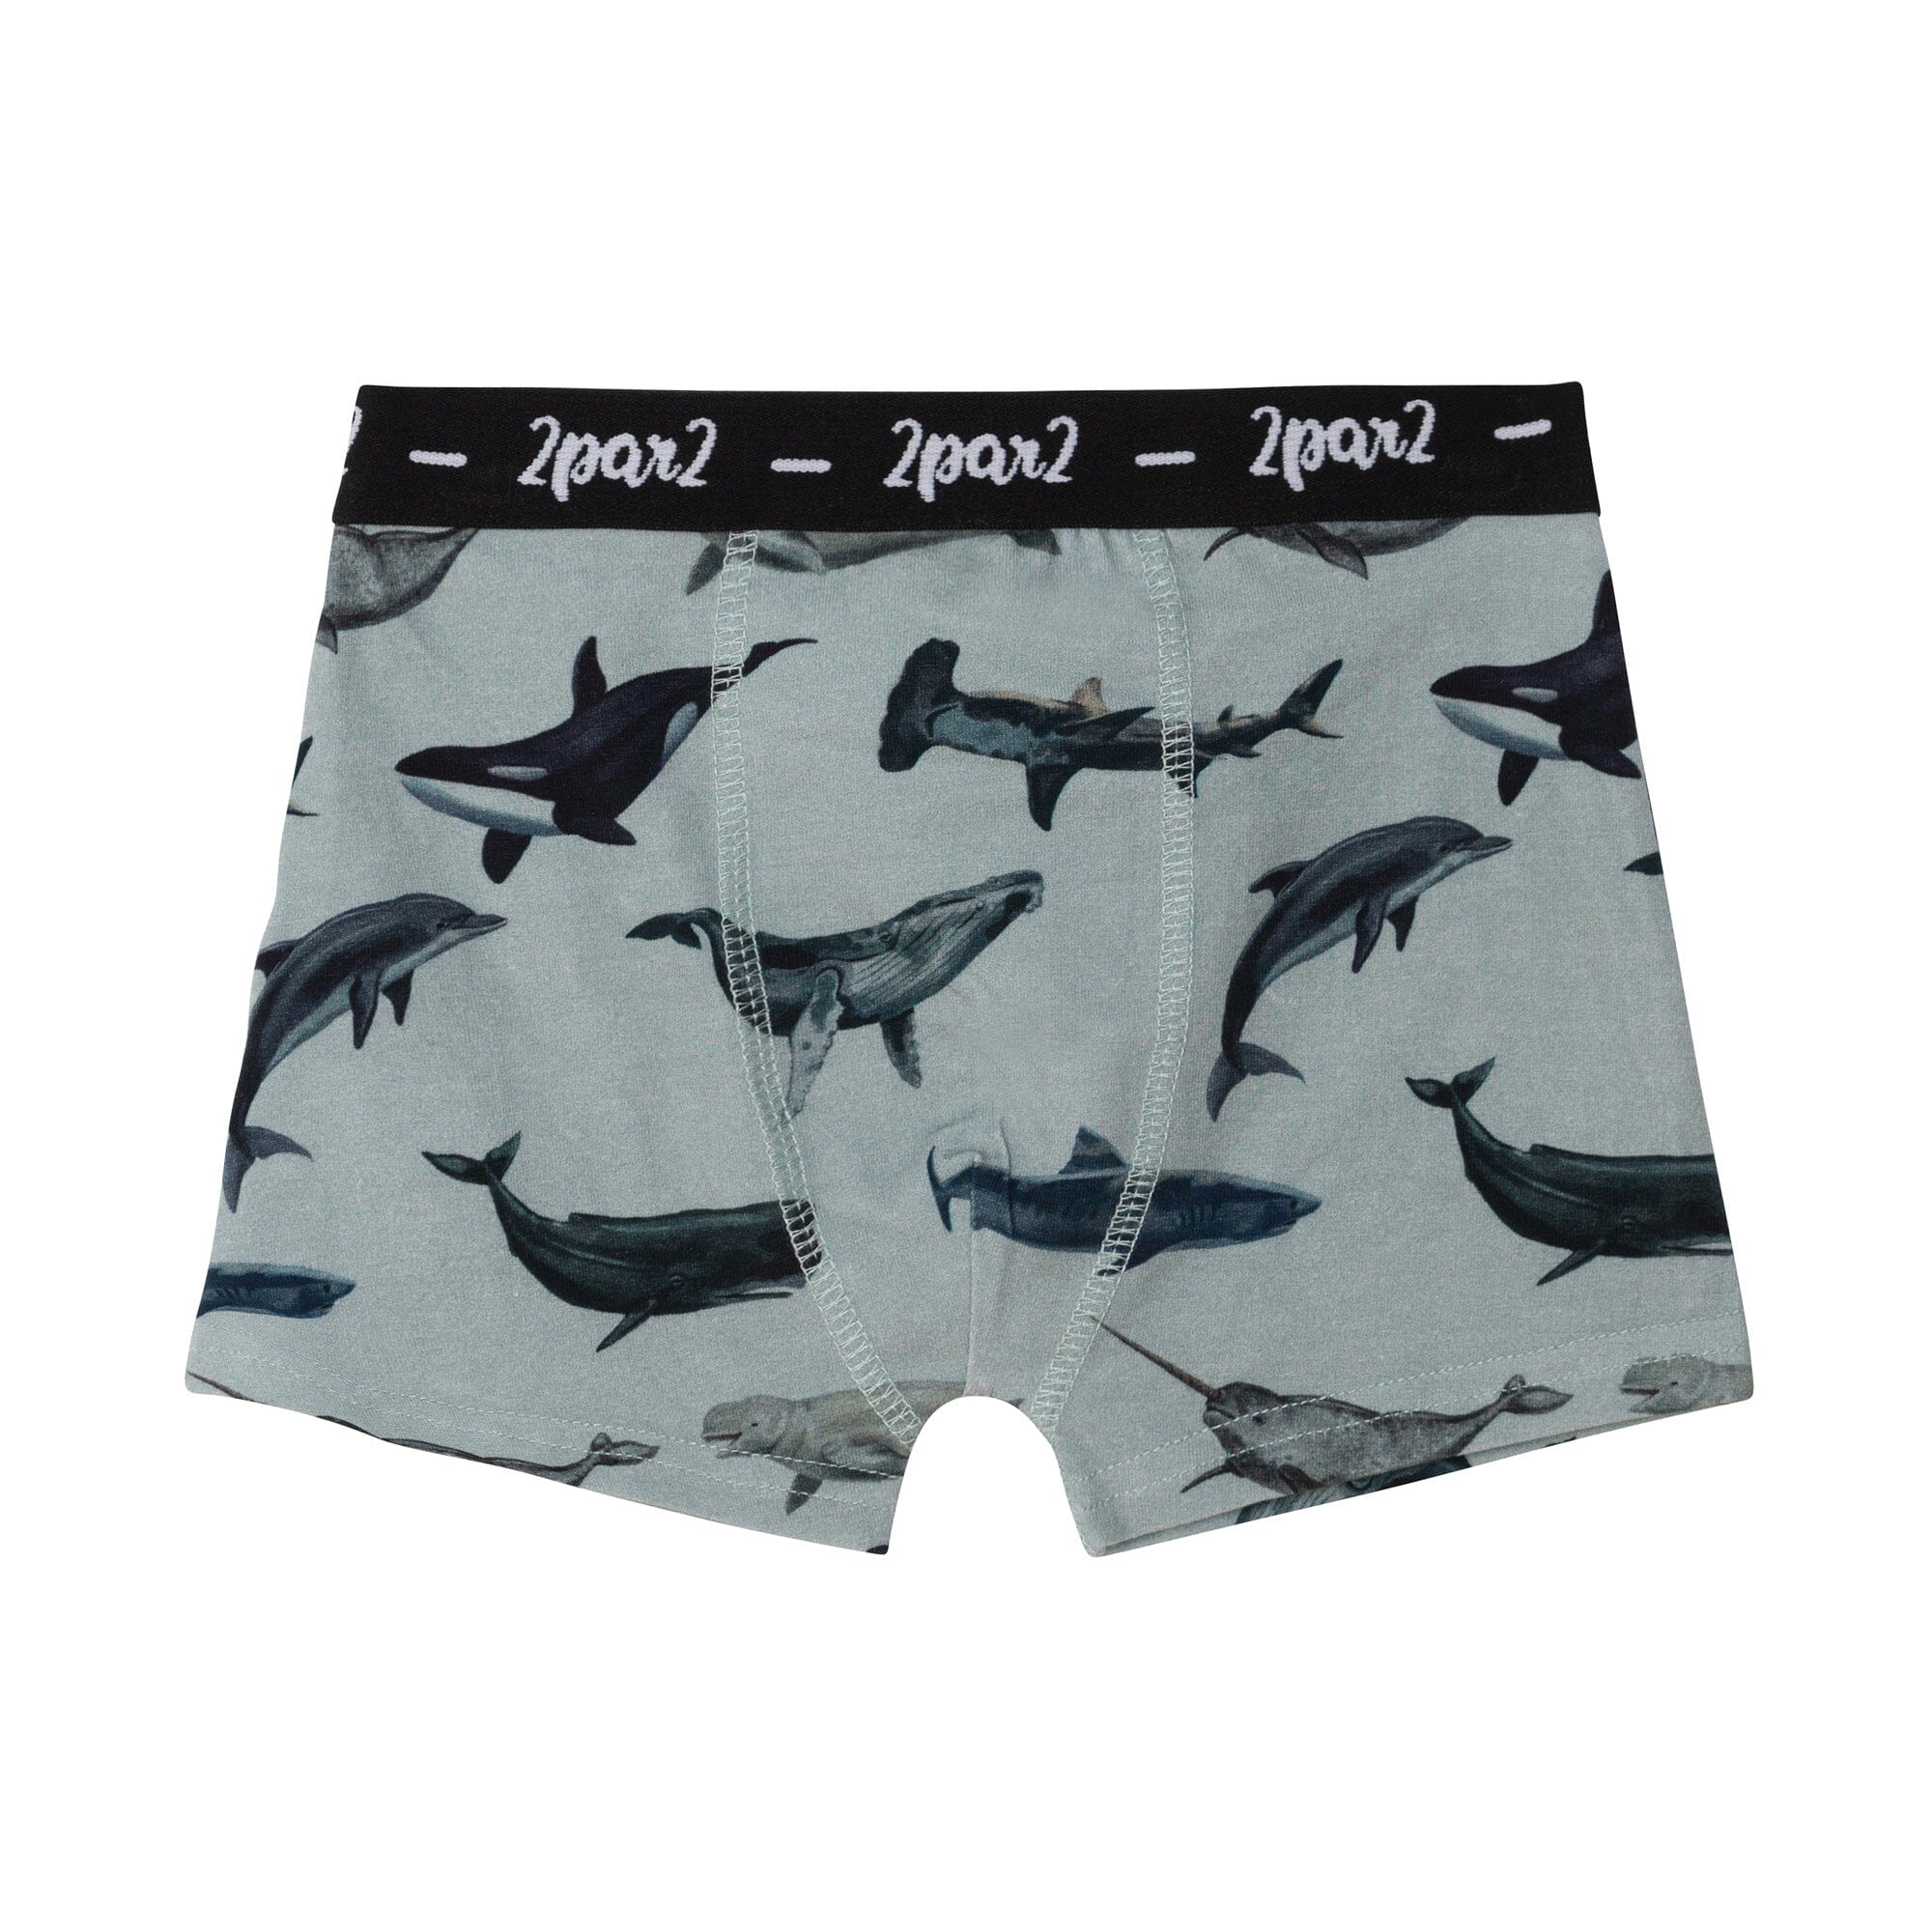 Boxer briefs modal soft waistband flat border shark pirate royal blue -  Capt'n Sharky